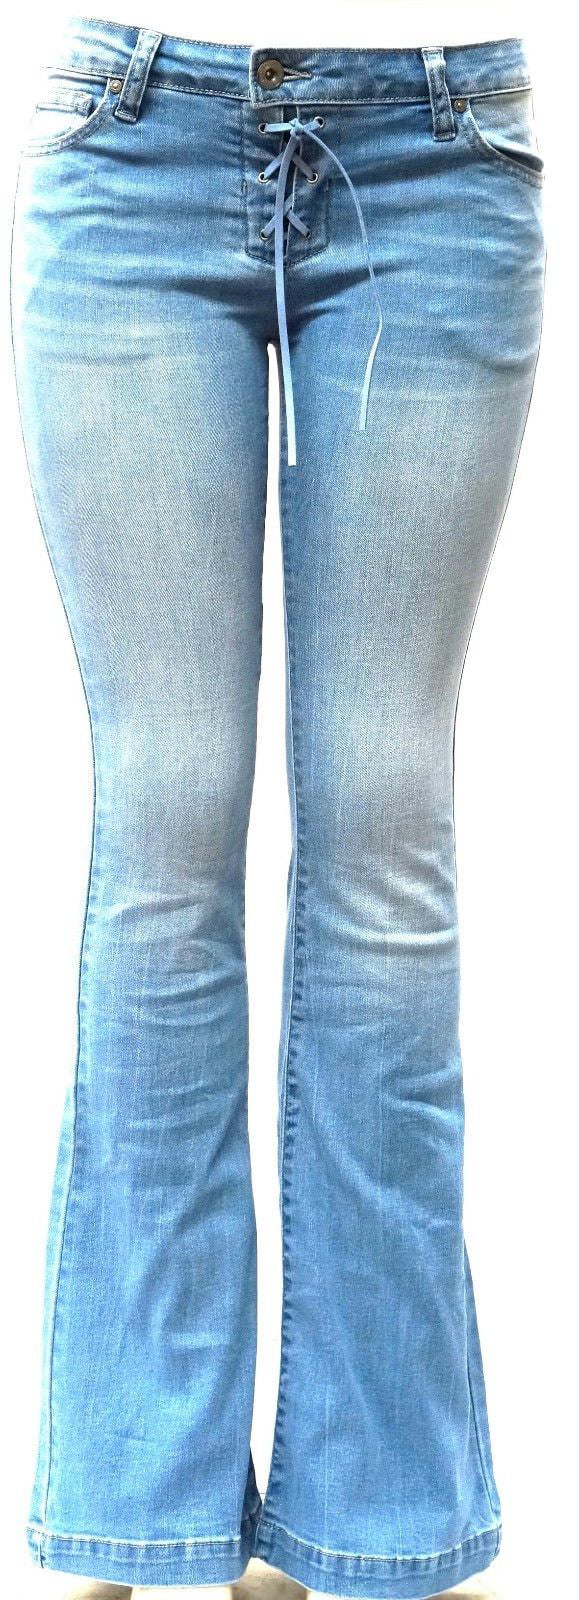 wax jean pants